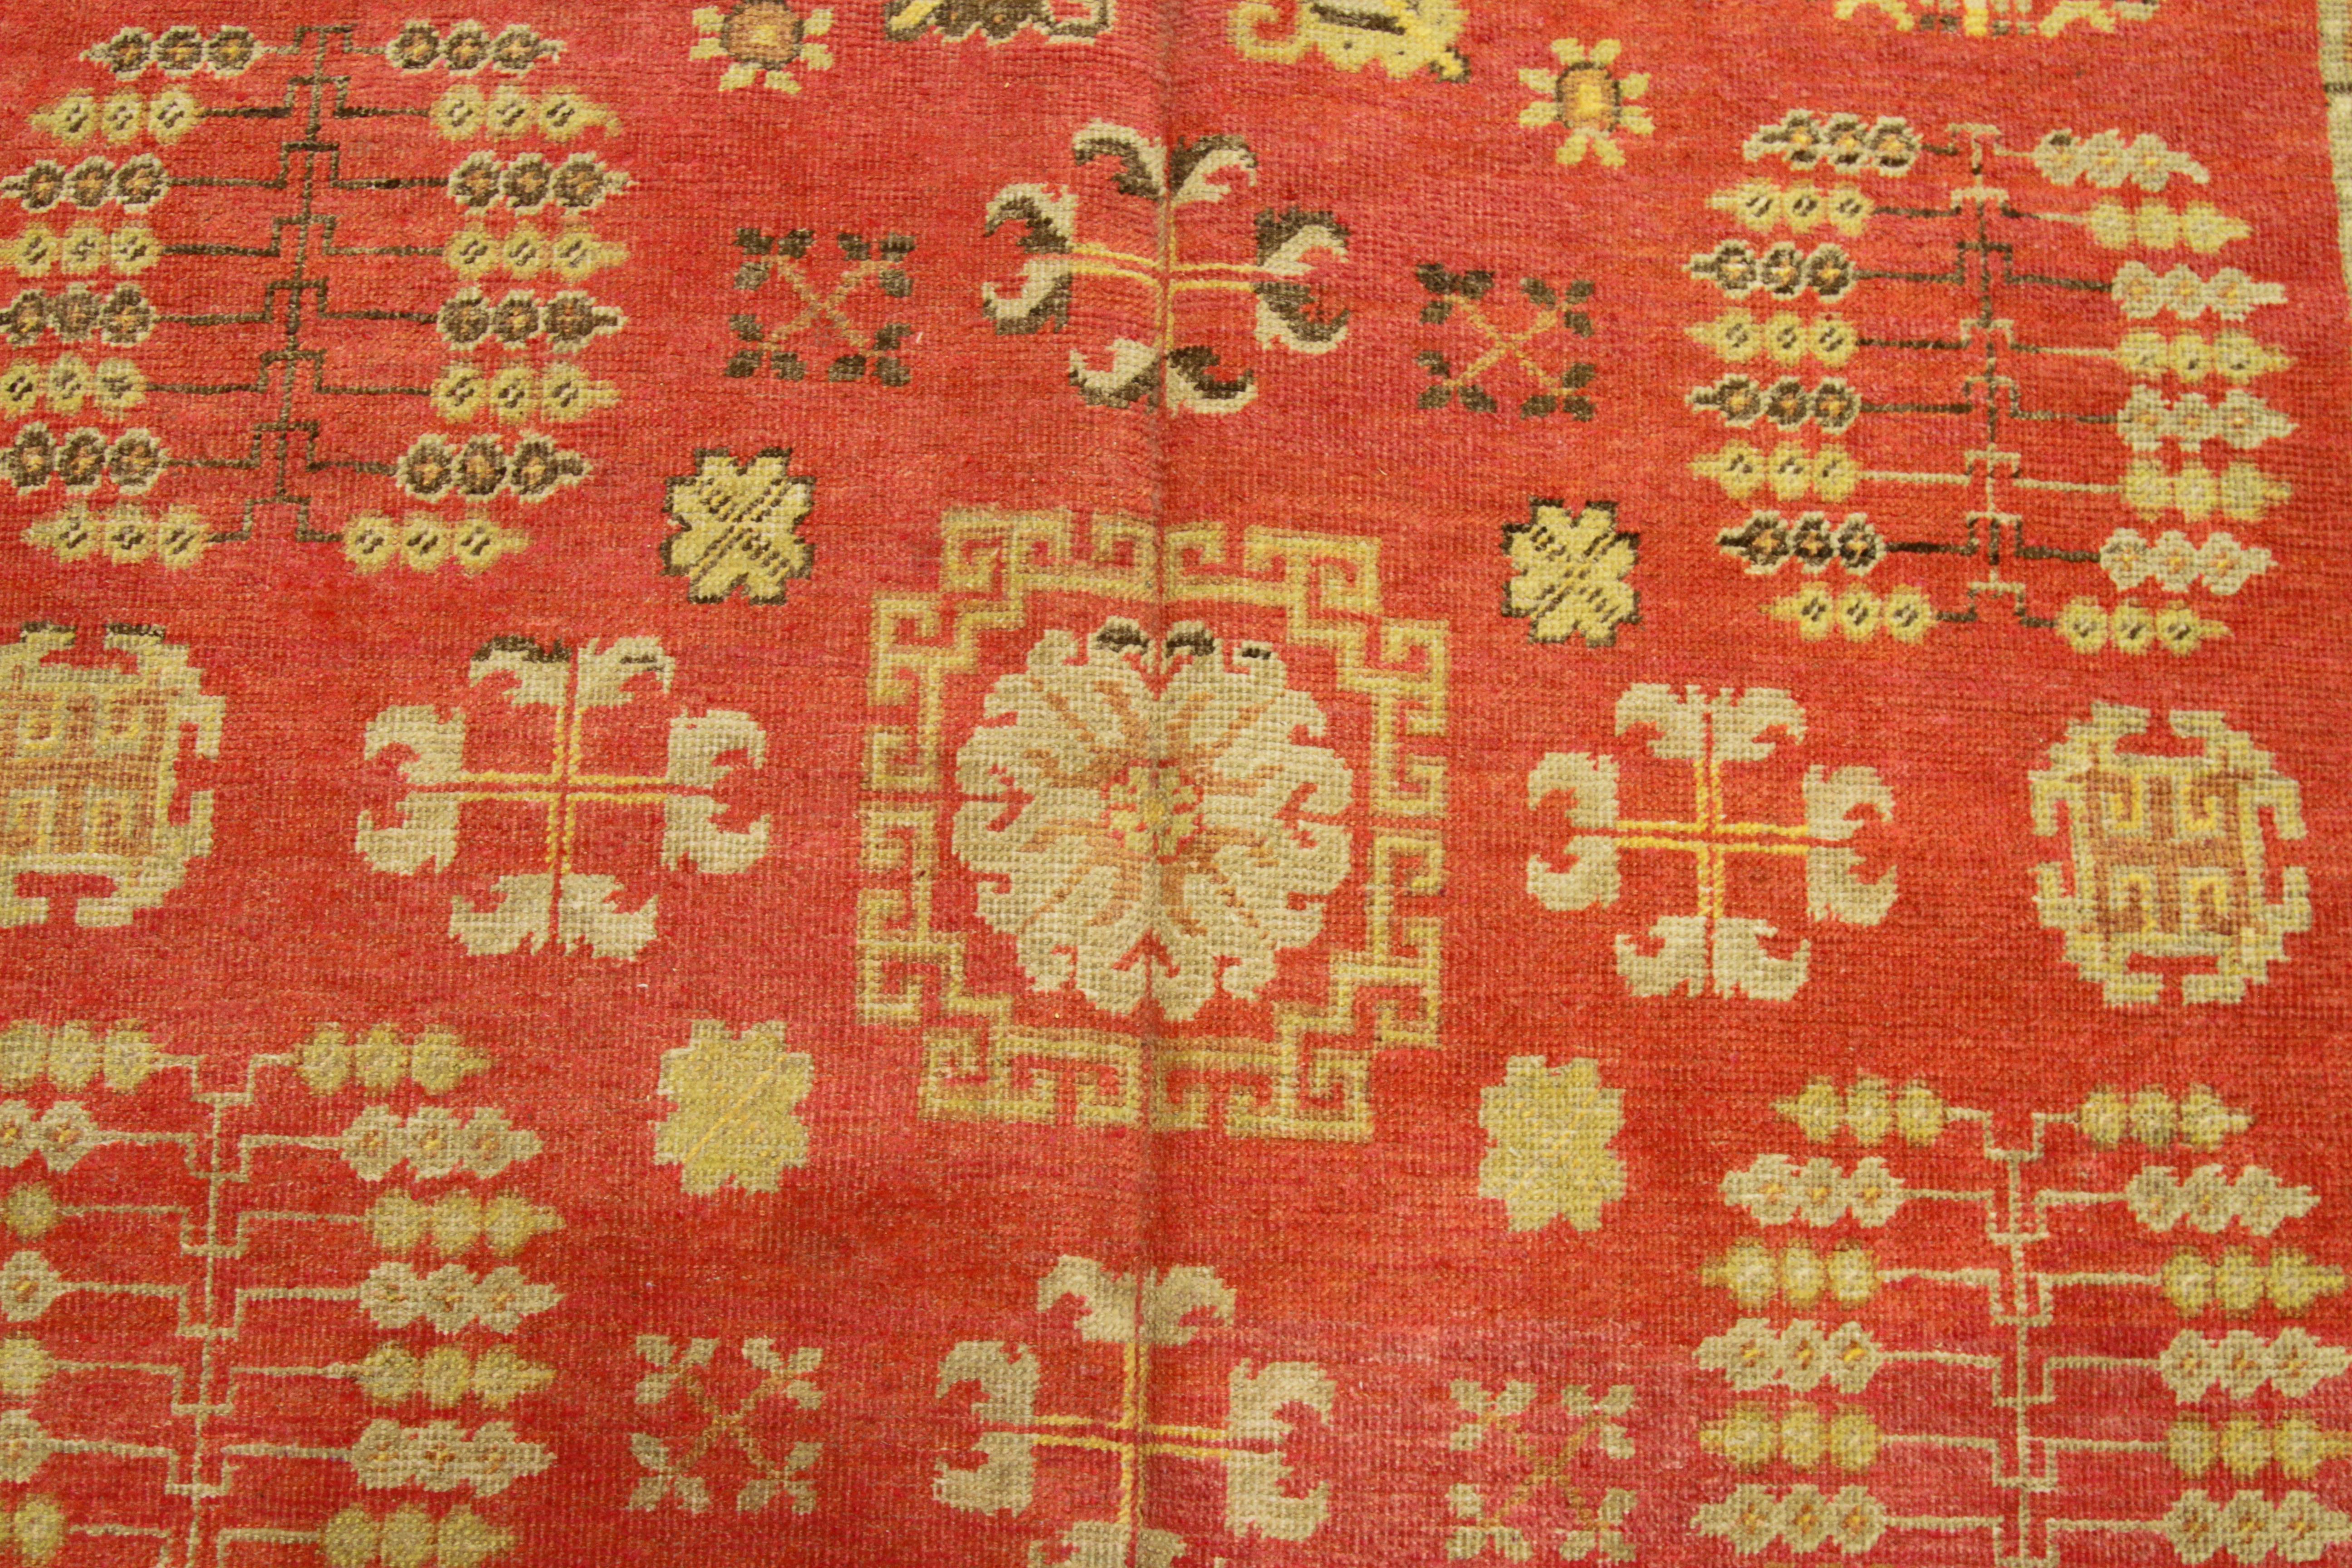 Antique Central Asian Rug Khotan Design with Unique Oriental Patterns circa 1920 For Sale 1